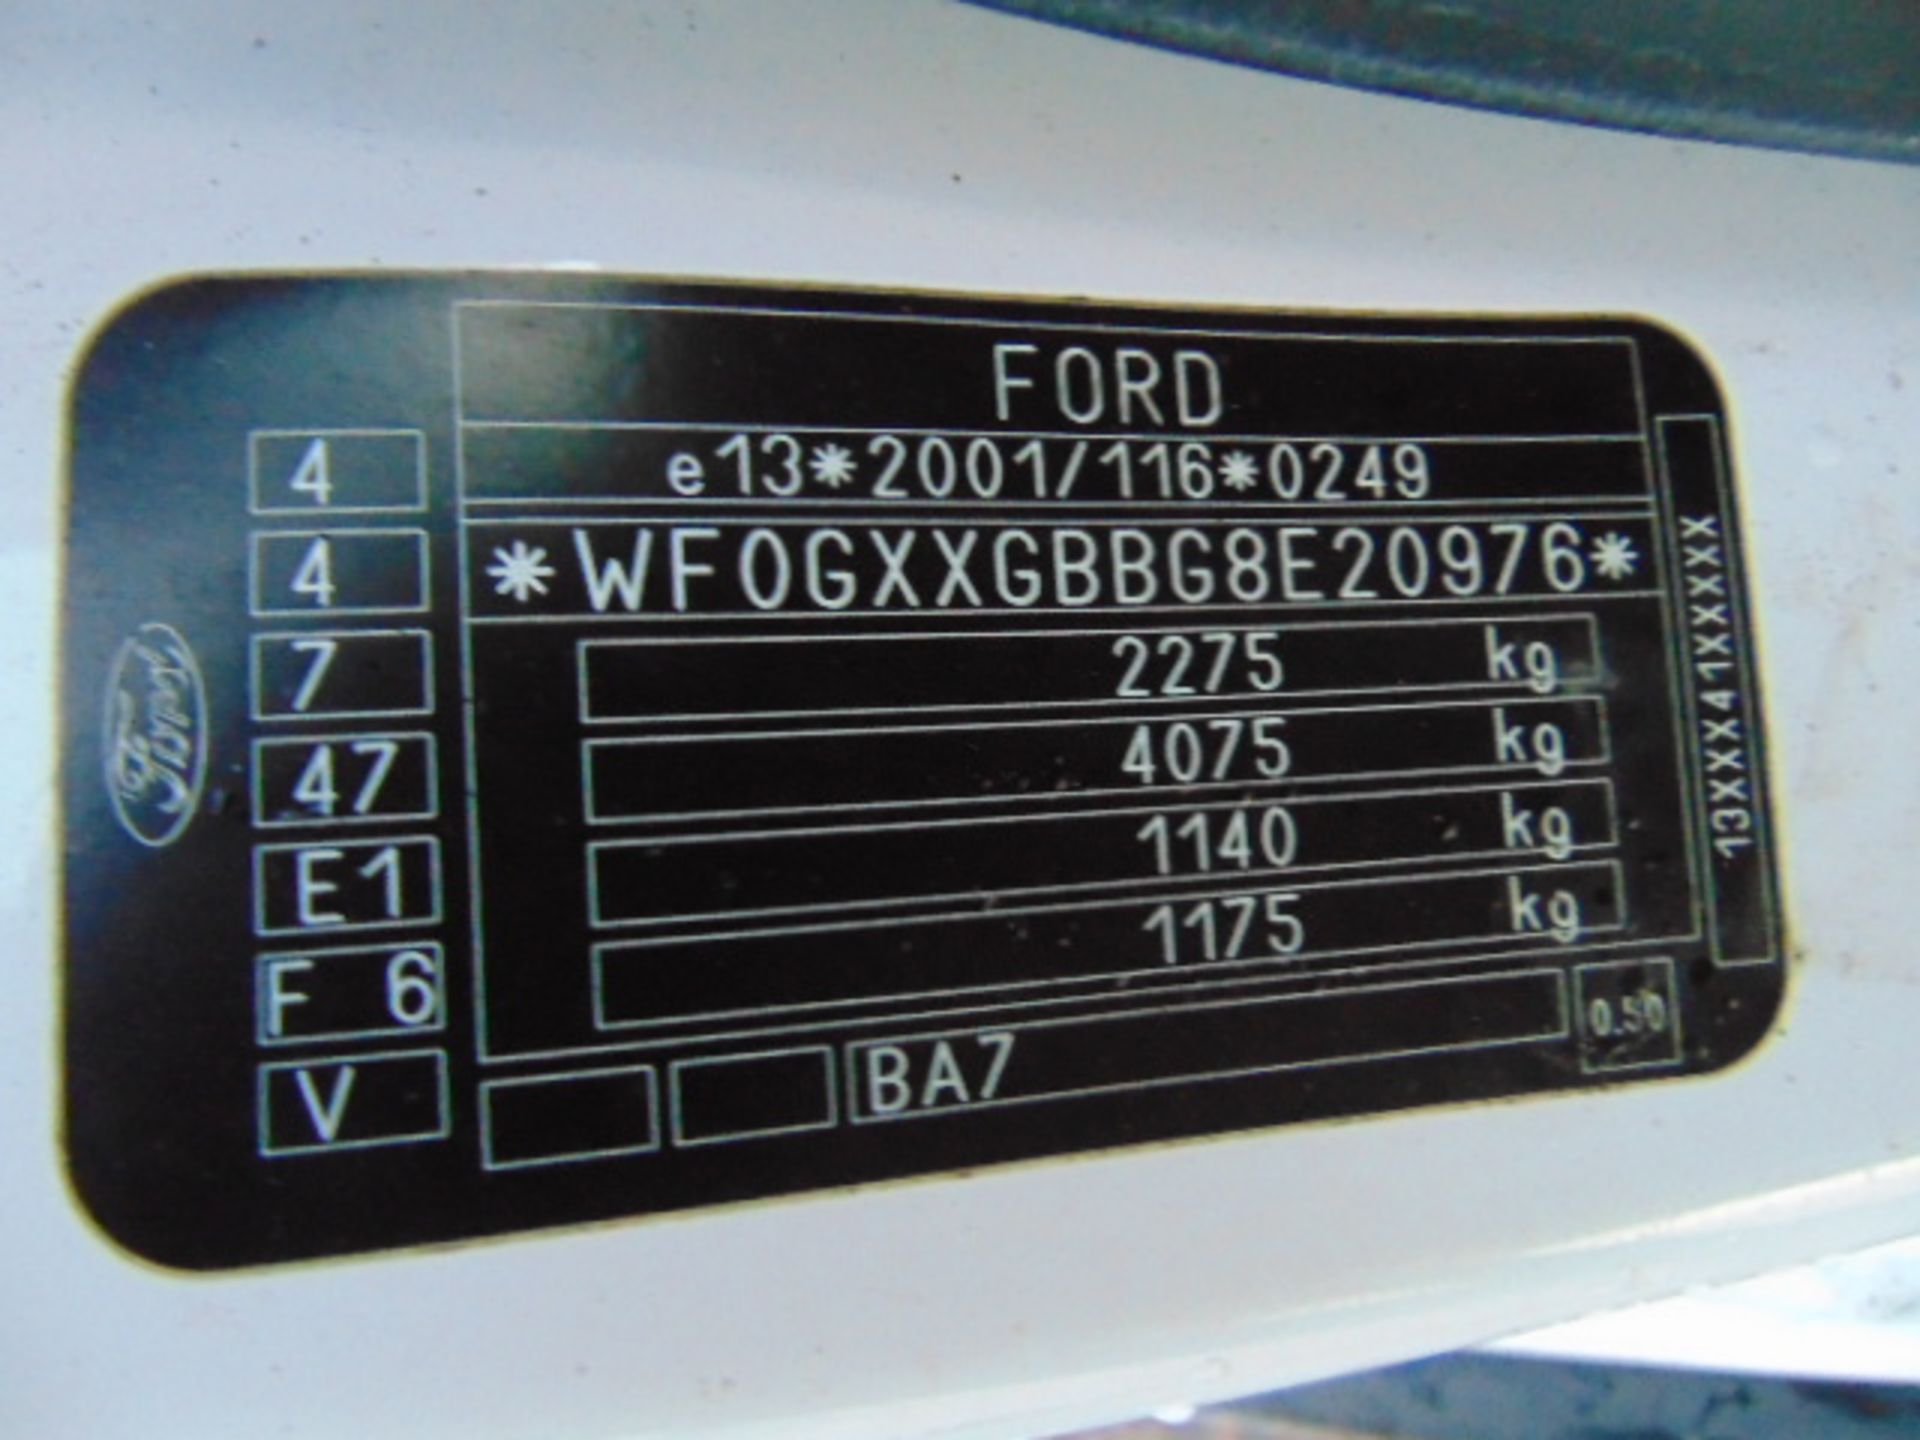 Ford Mondeo Zetec 2.0 TDCi - Image 15 of 16